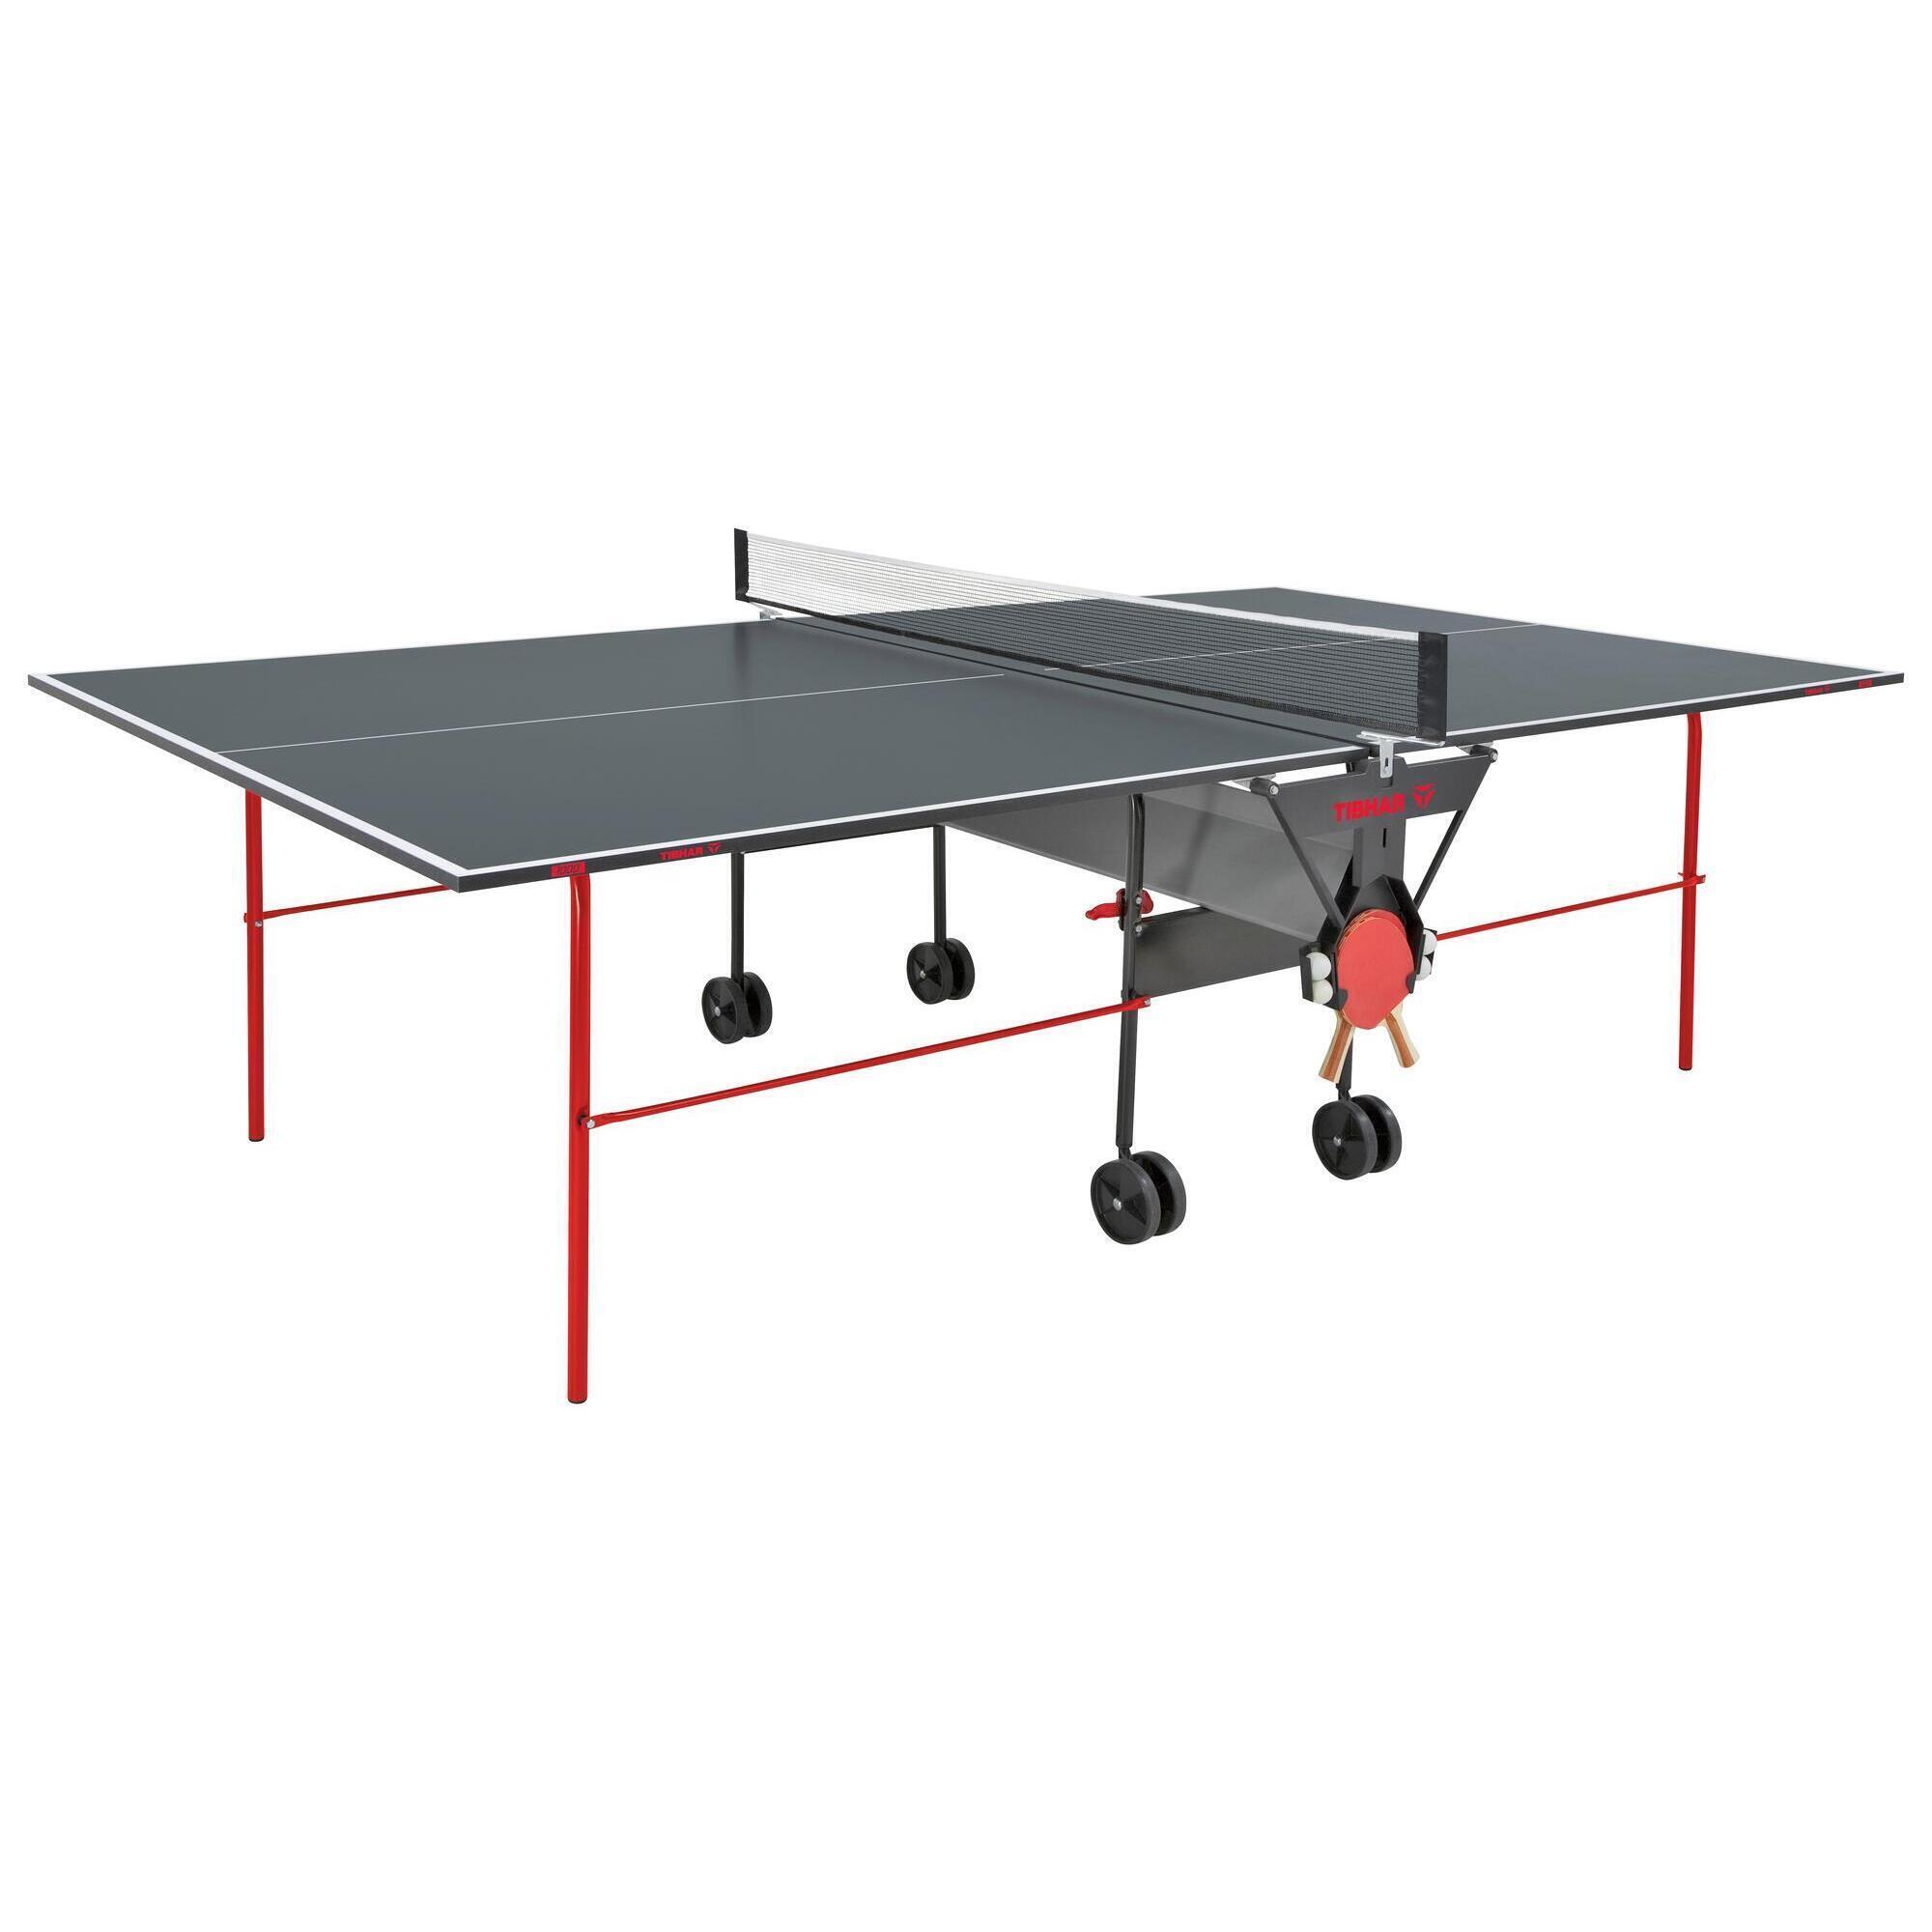 TIBHAR Tibhar 1000 Table Tennis Table